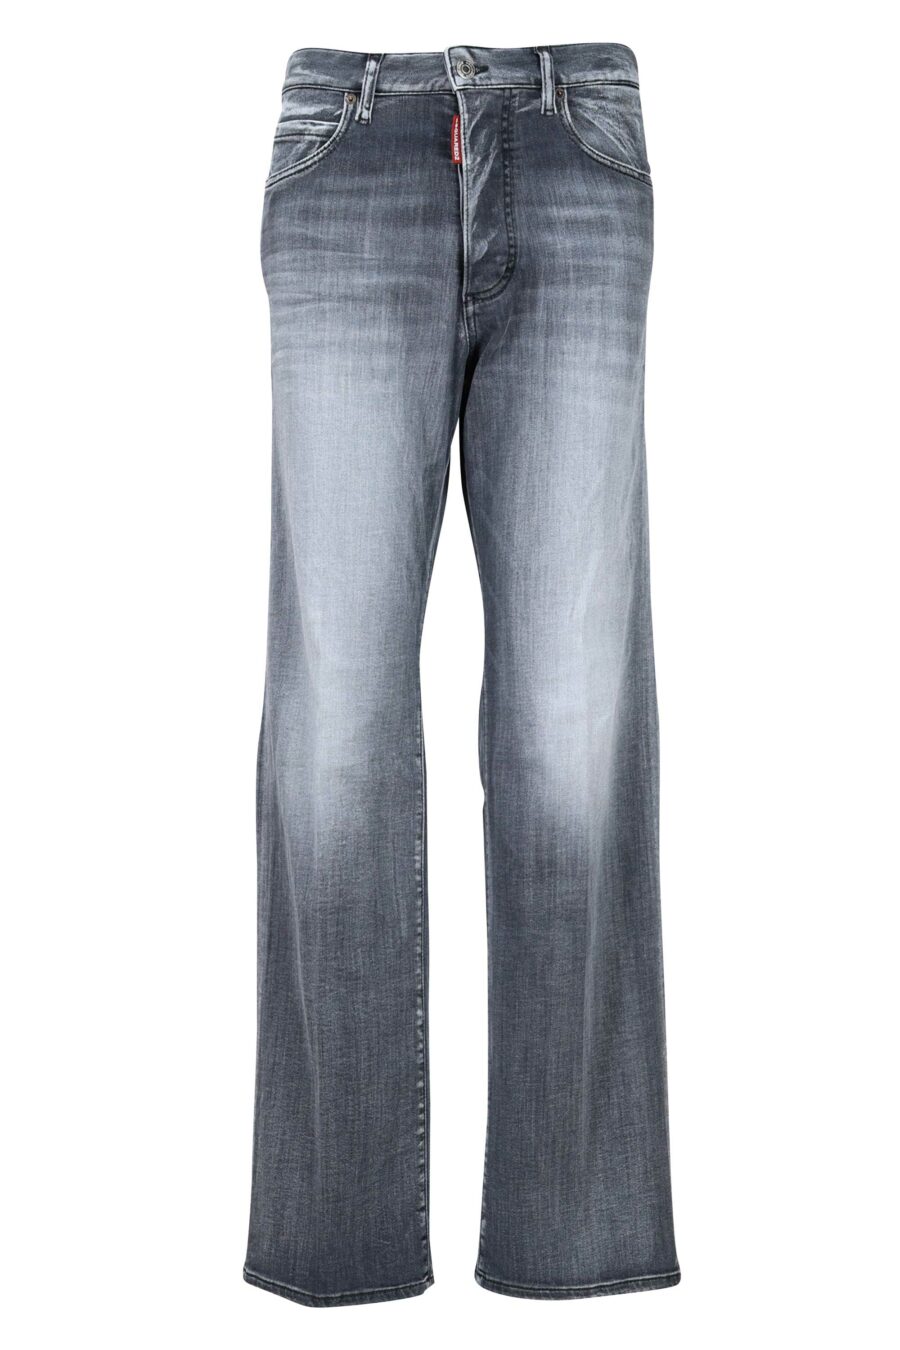 Denim trousers "San Diego jean" black worn - 8054148230845